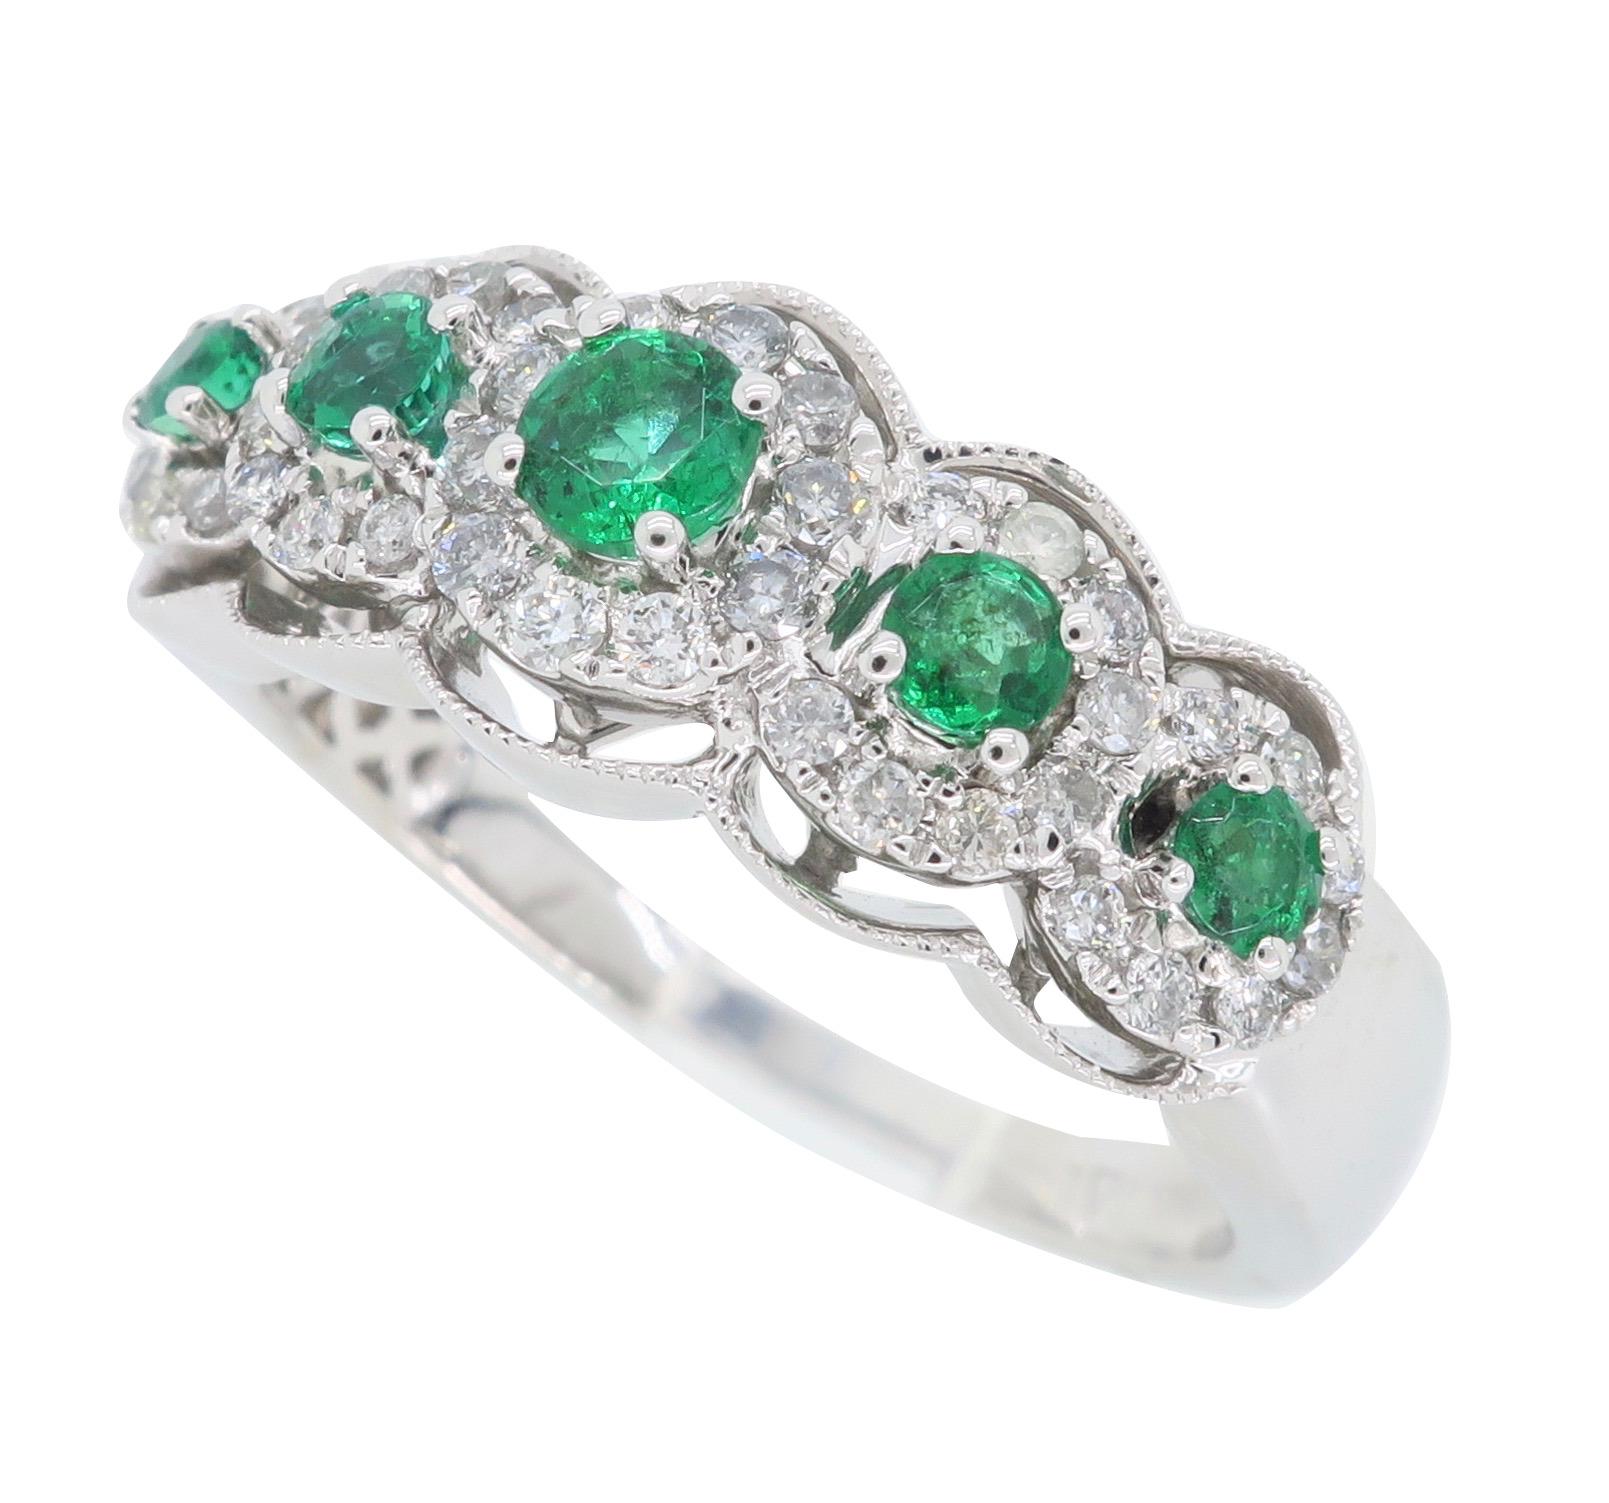 emerald diamond band